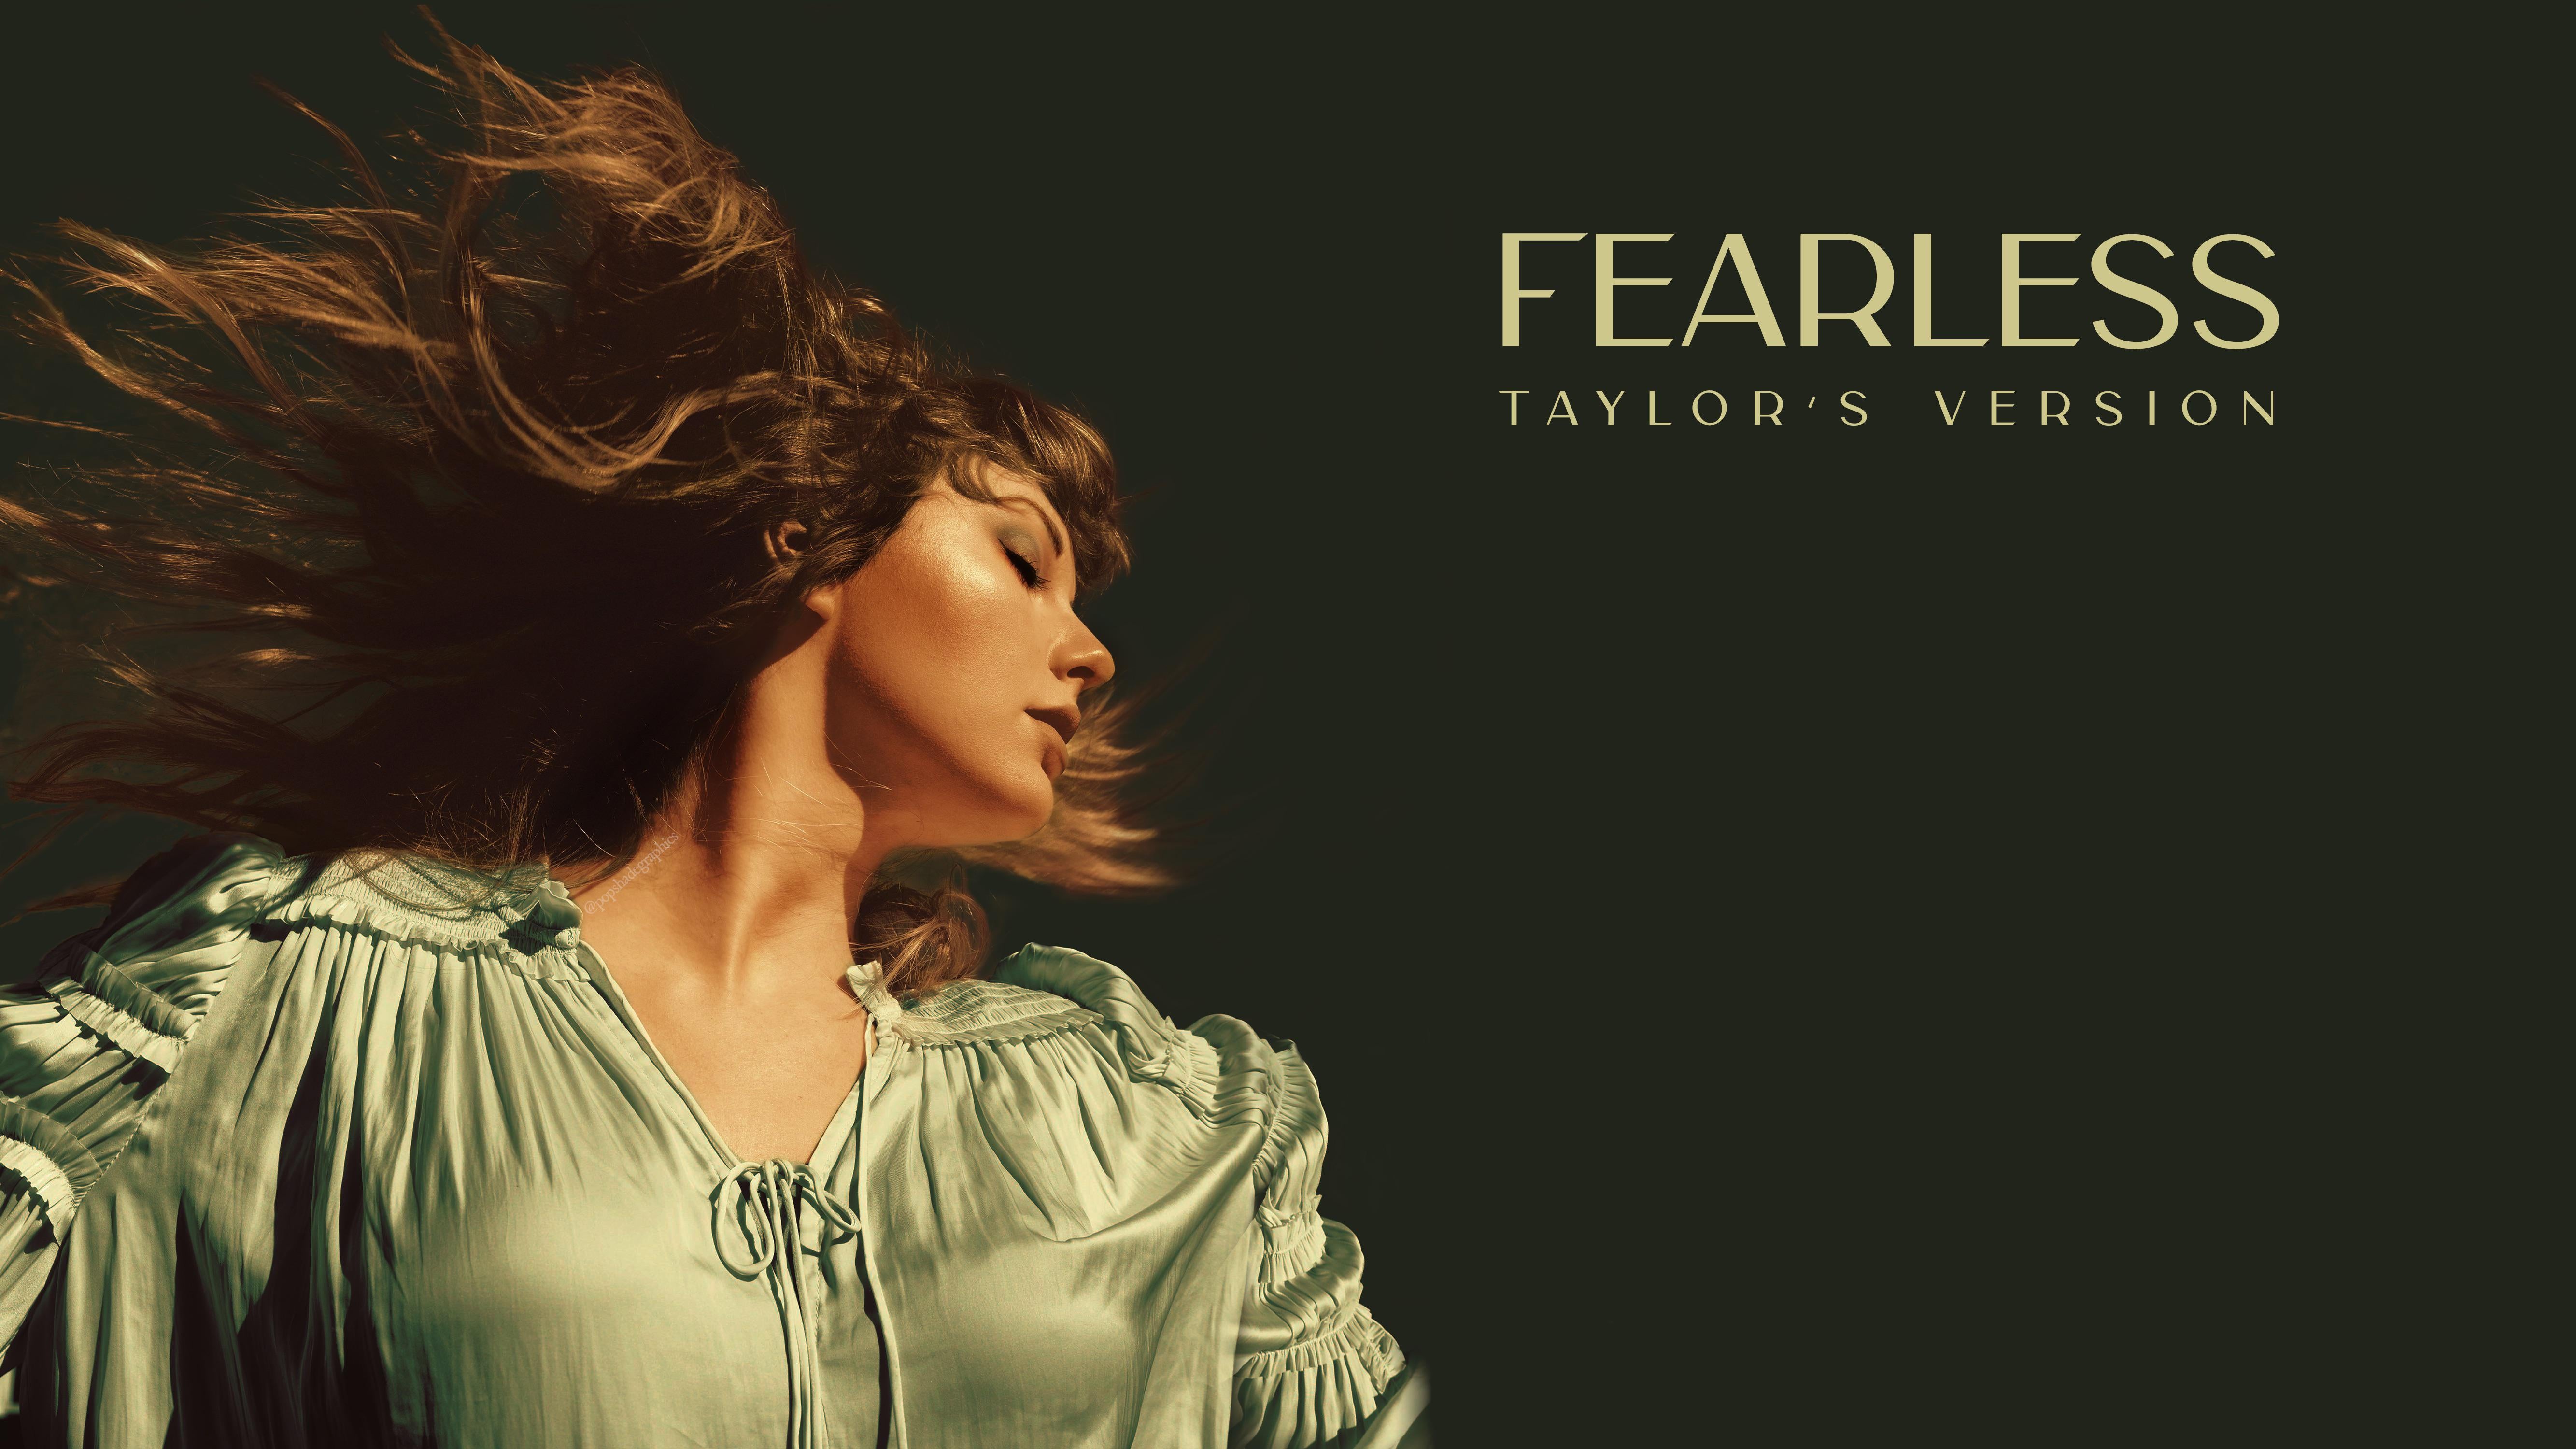 Fearless wallpaper (desktop version ) 4k resolution ✨: TaylorSwift